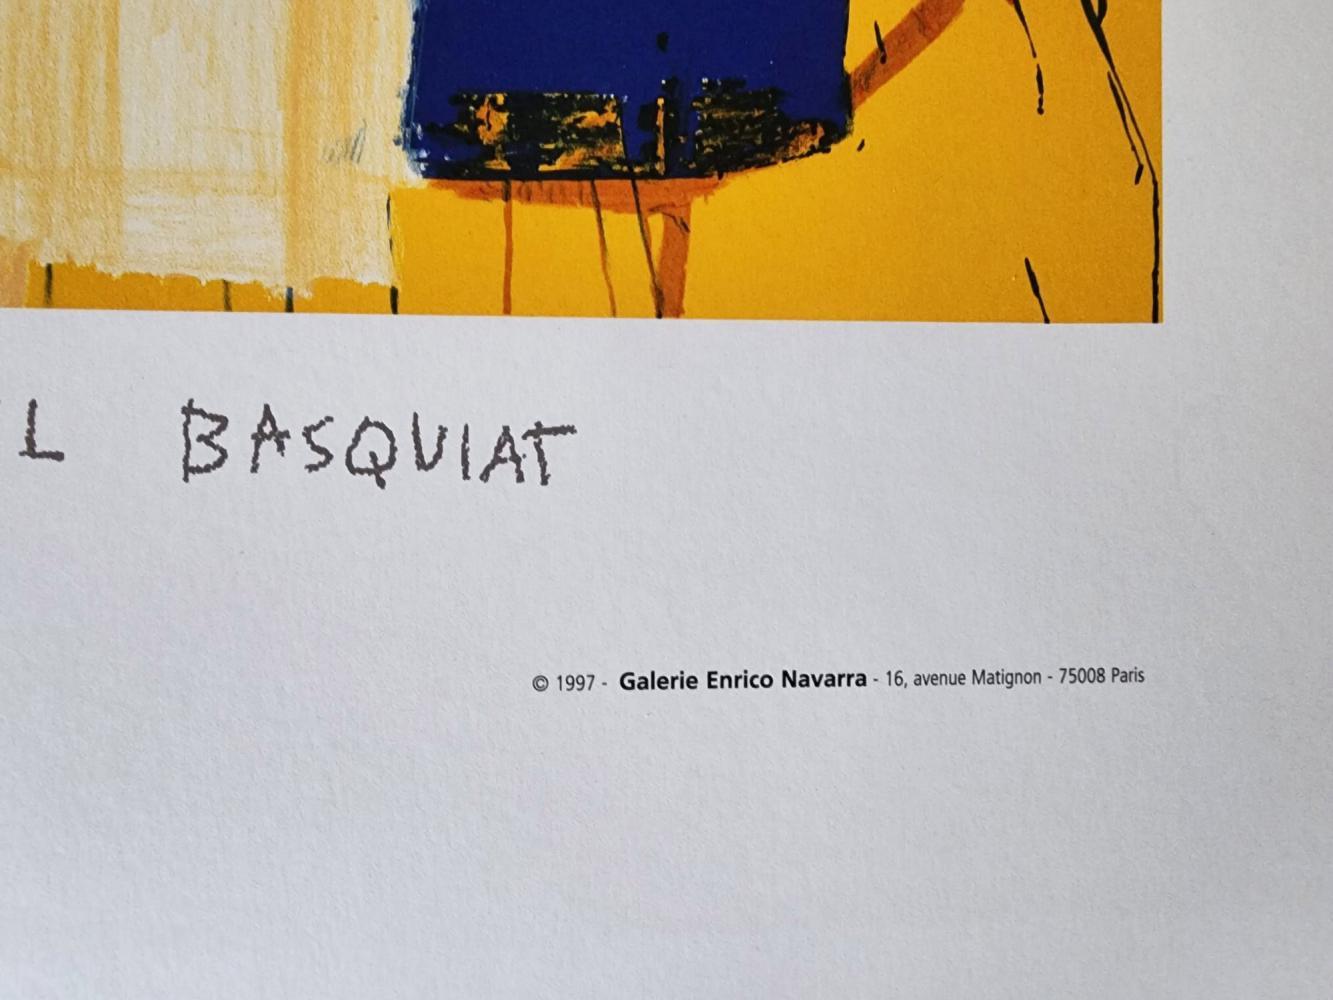 Jean Michel Basquiat
